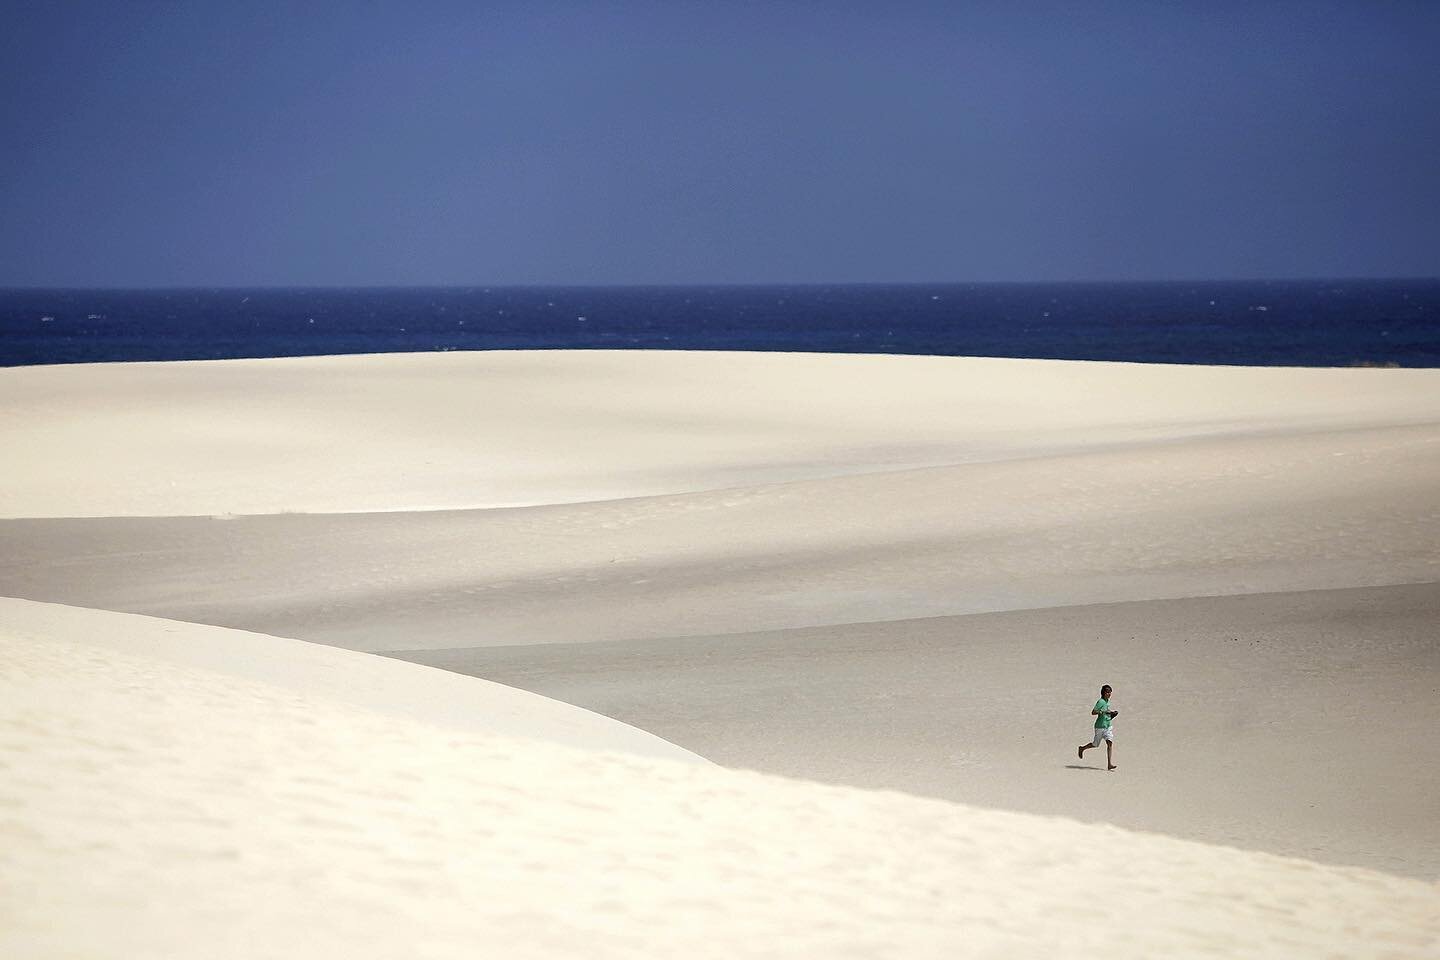 Corralejo, Fuerteventura, 2011. ⁠⁠
⁠⁠
#sanddunes #fuerteventura #travel #canaryisland #desert #beach #nature #jwbild #runing #landscape #sand #corralejo #ocean #summer  #fromthearchive